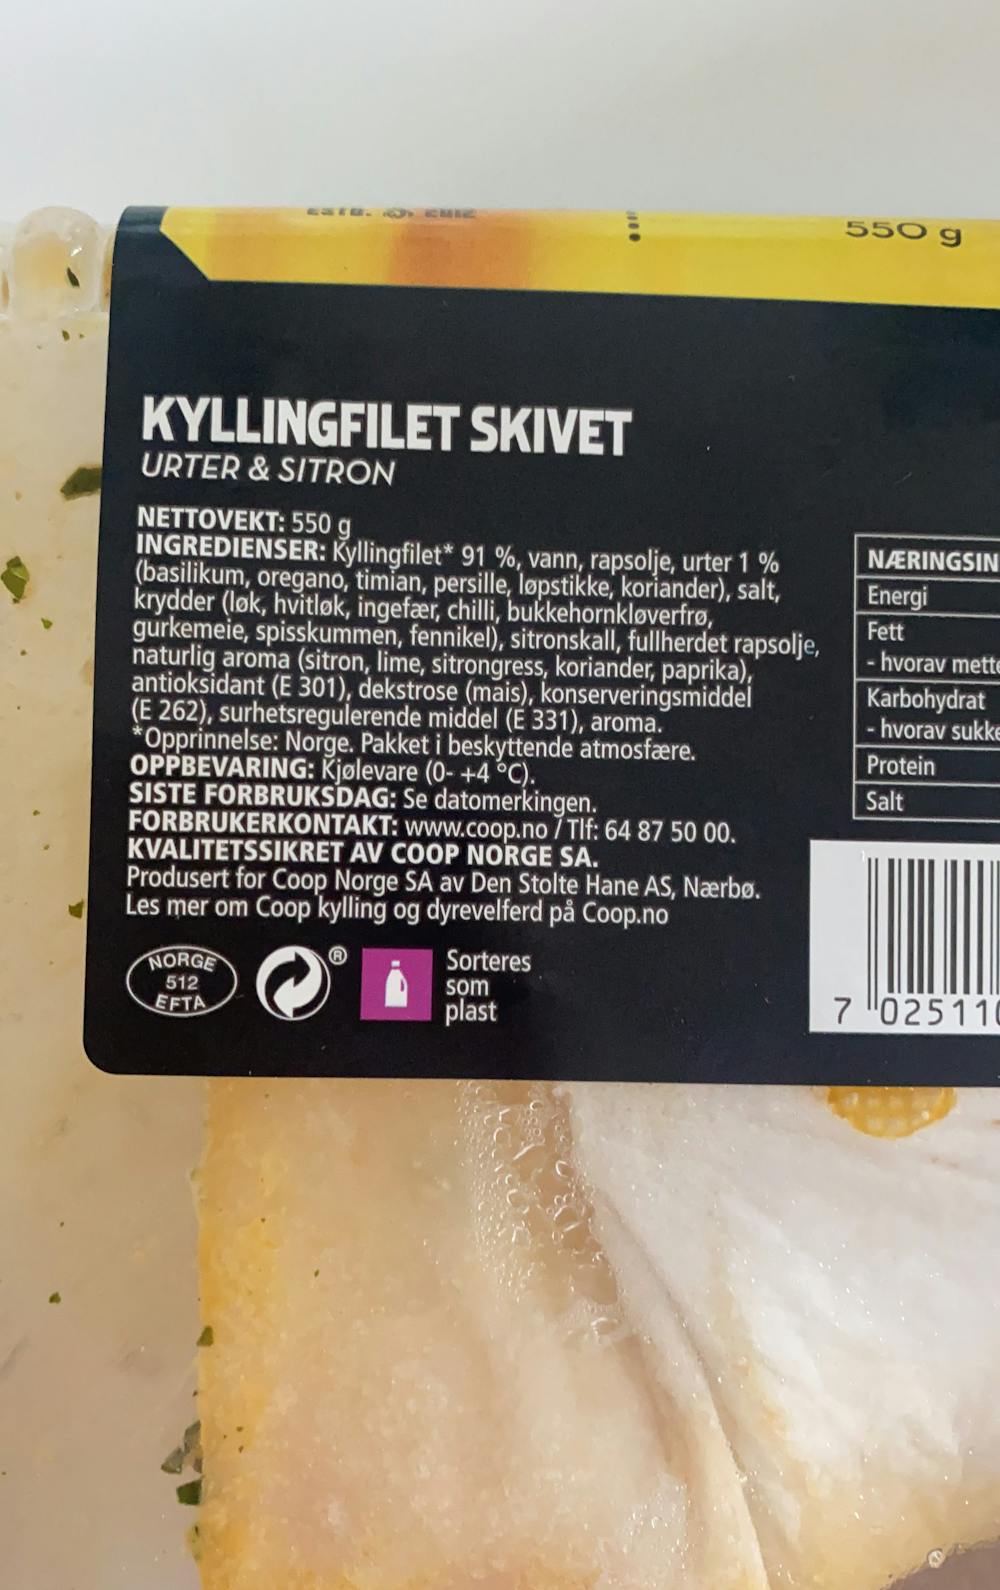 Ingredienslisten til Kyllingfilet skivet - Urter & sitron , Coop 